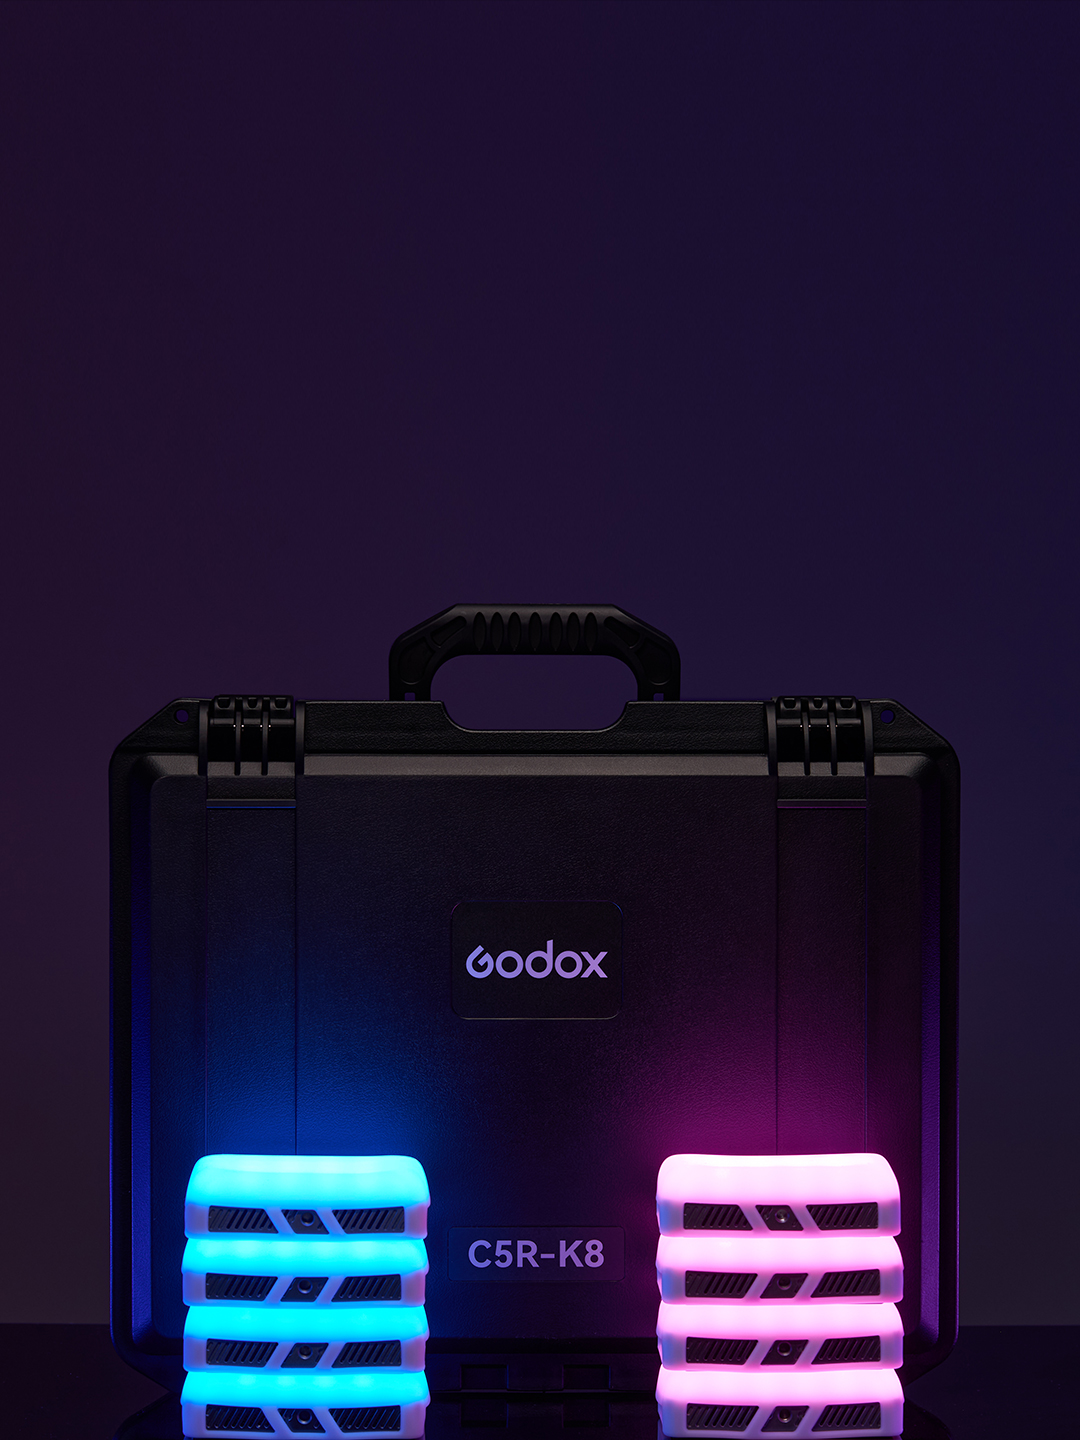   Godox C5R-K8      Ultra-mart